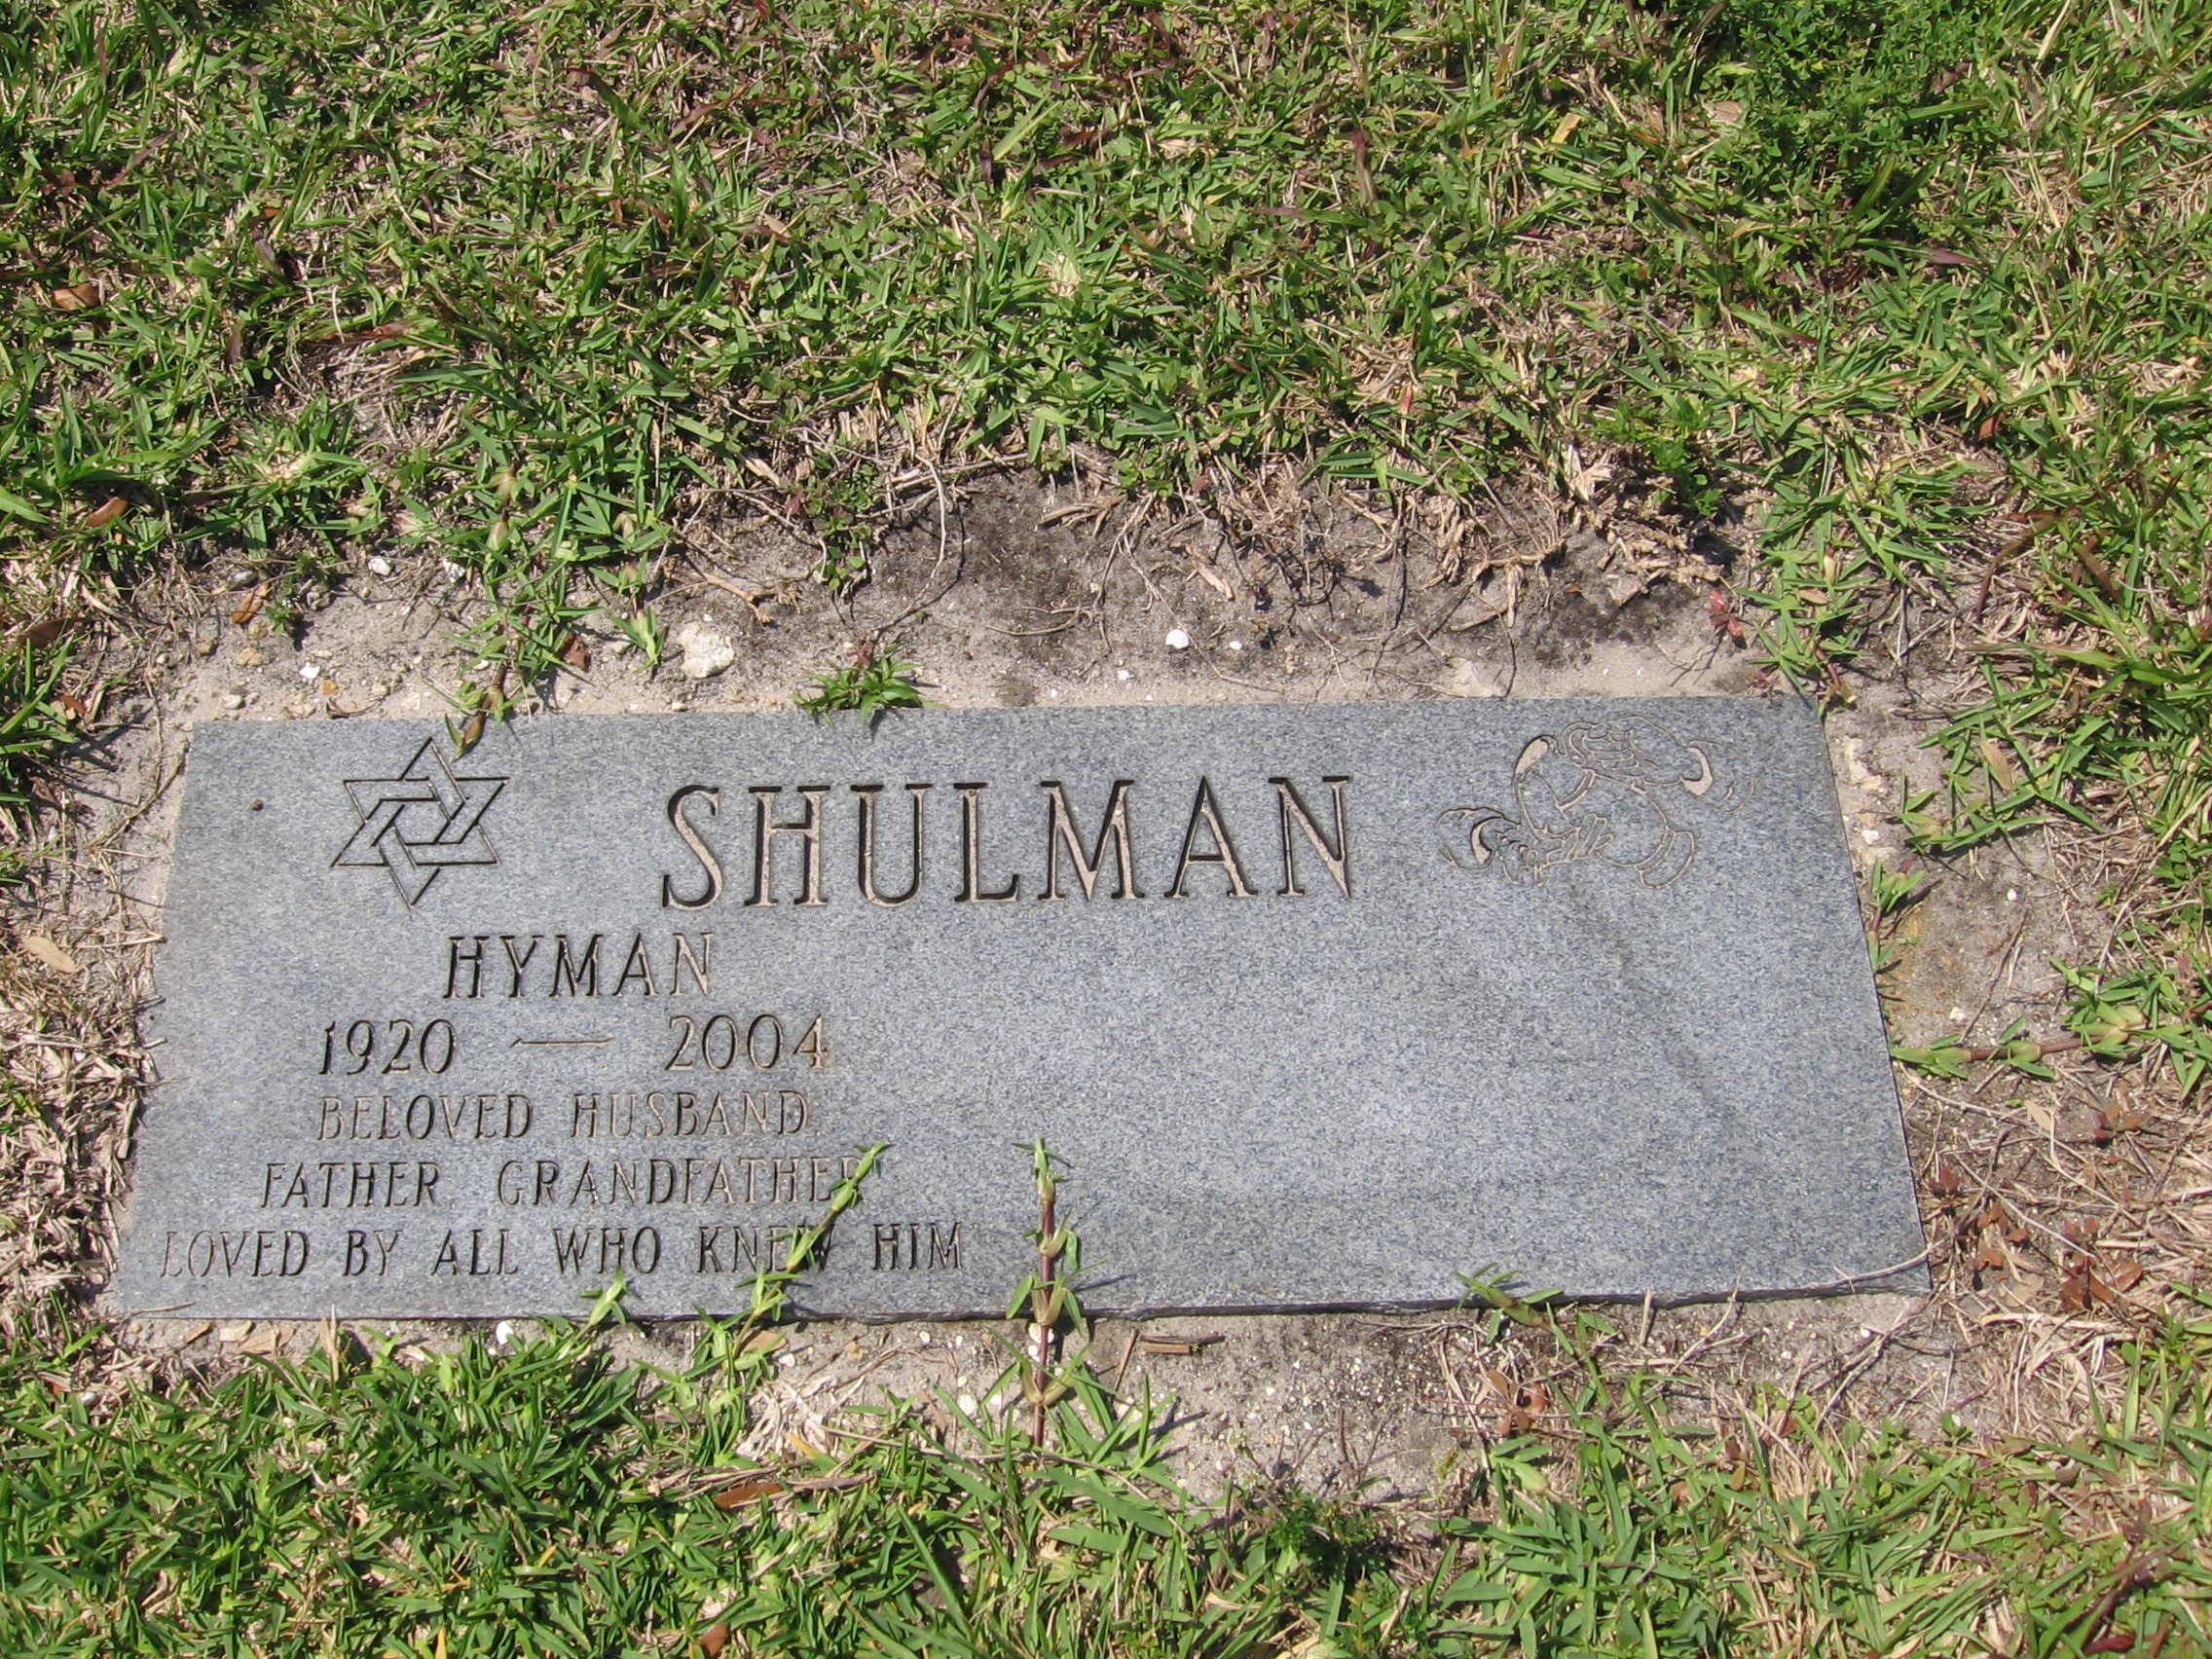 Hyman Shulman